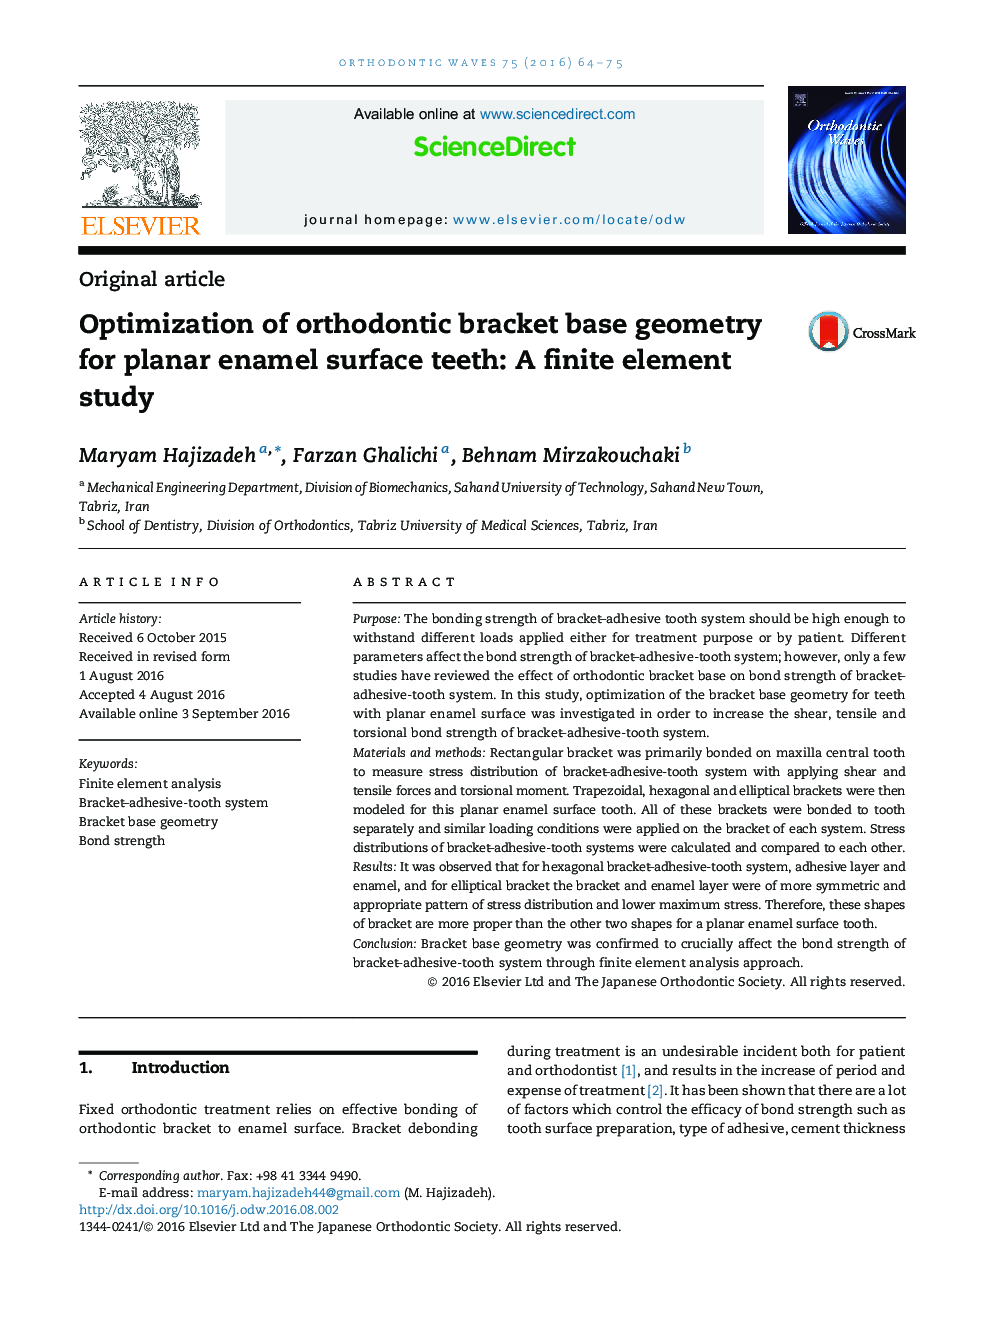 Optimization of orthodontic bracket base geometry for planar enamel surface teeth: A finite element study